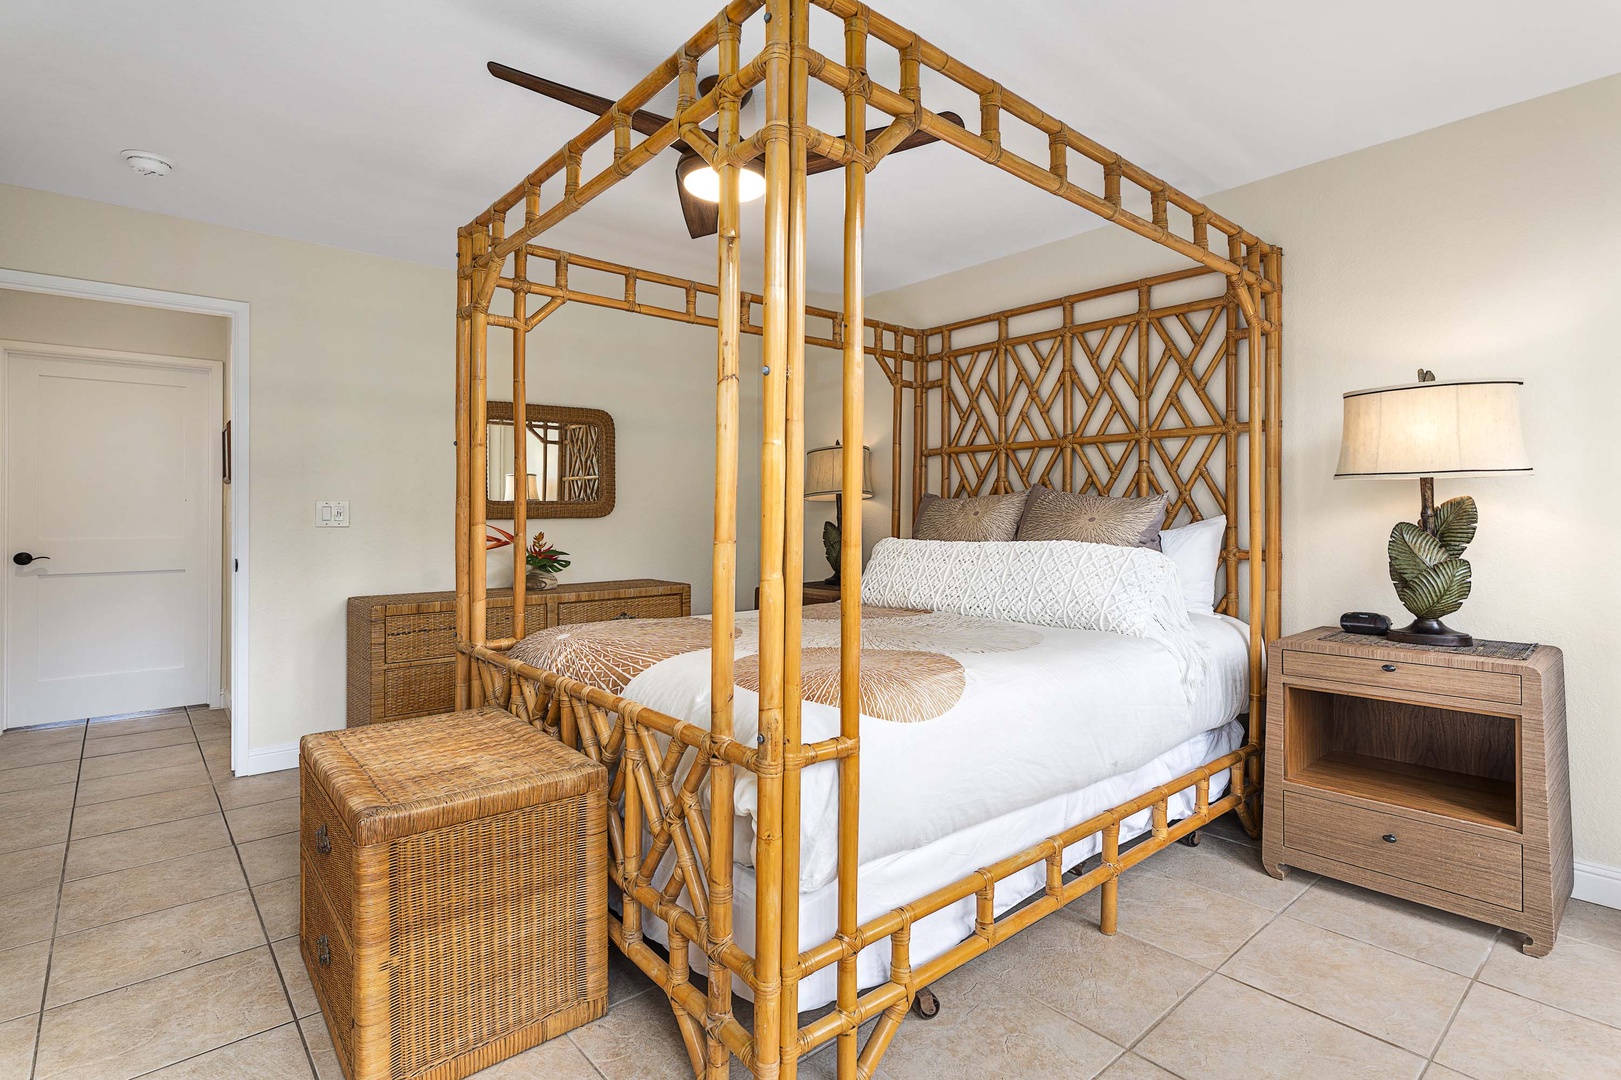 Kailua Kona Vacation Rentals, Keauhou Kona Surf & Racquet 2101 - Bamboo bed frame and bamboo furniture adorns the guest bedroom.